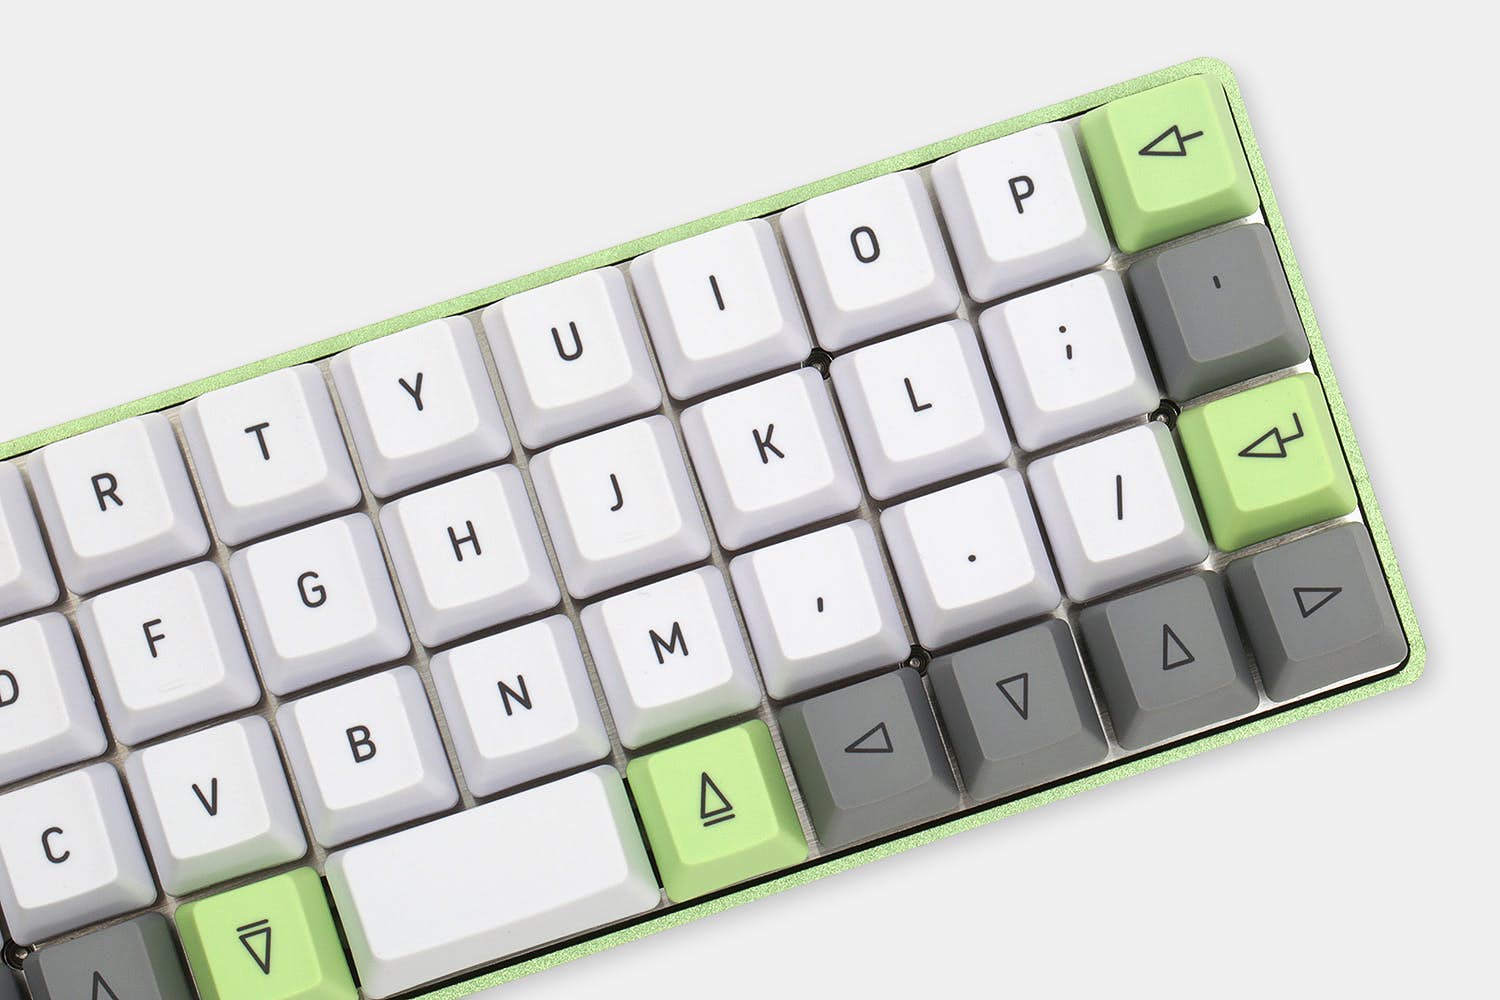 Small key. Клавиатура с китом. Клавиатура Kite. Клавиатура ЭМС кнопки. Planck Keyboard PCB.